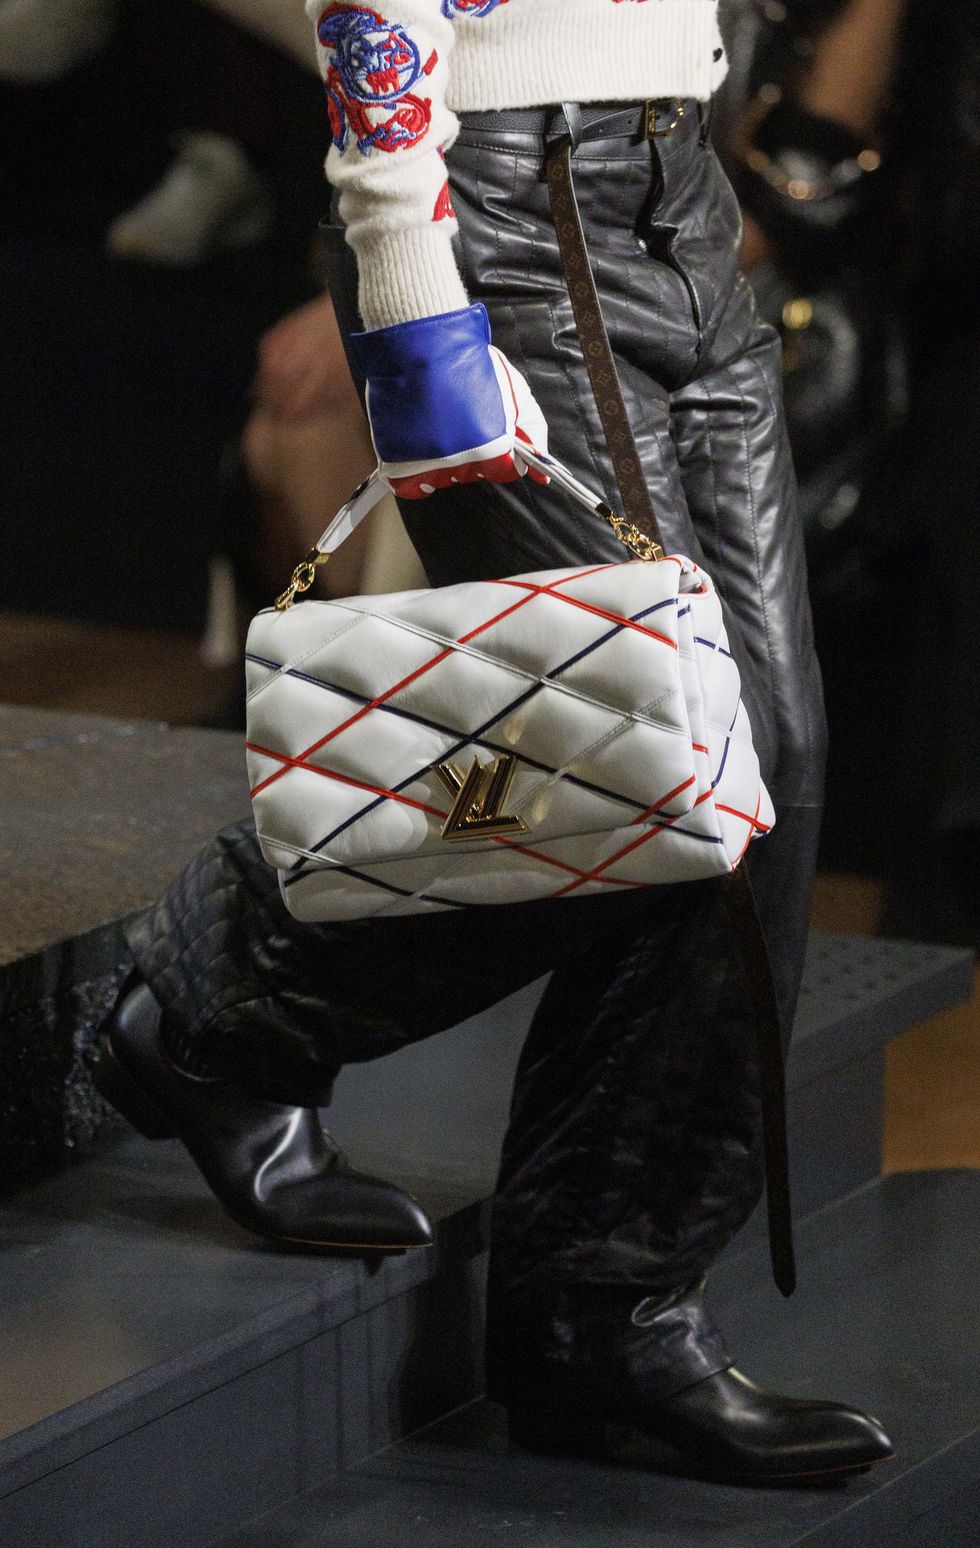 Louis Vuitton's New 'GO-14' Bag is Set to Reach Icon Status - V